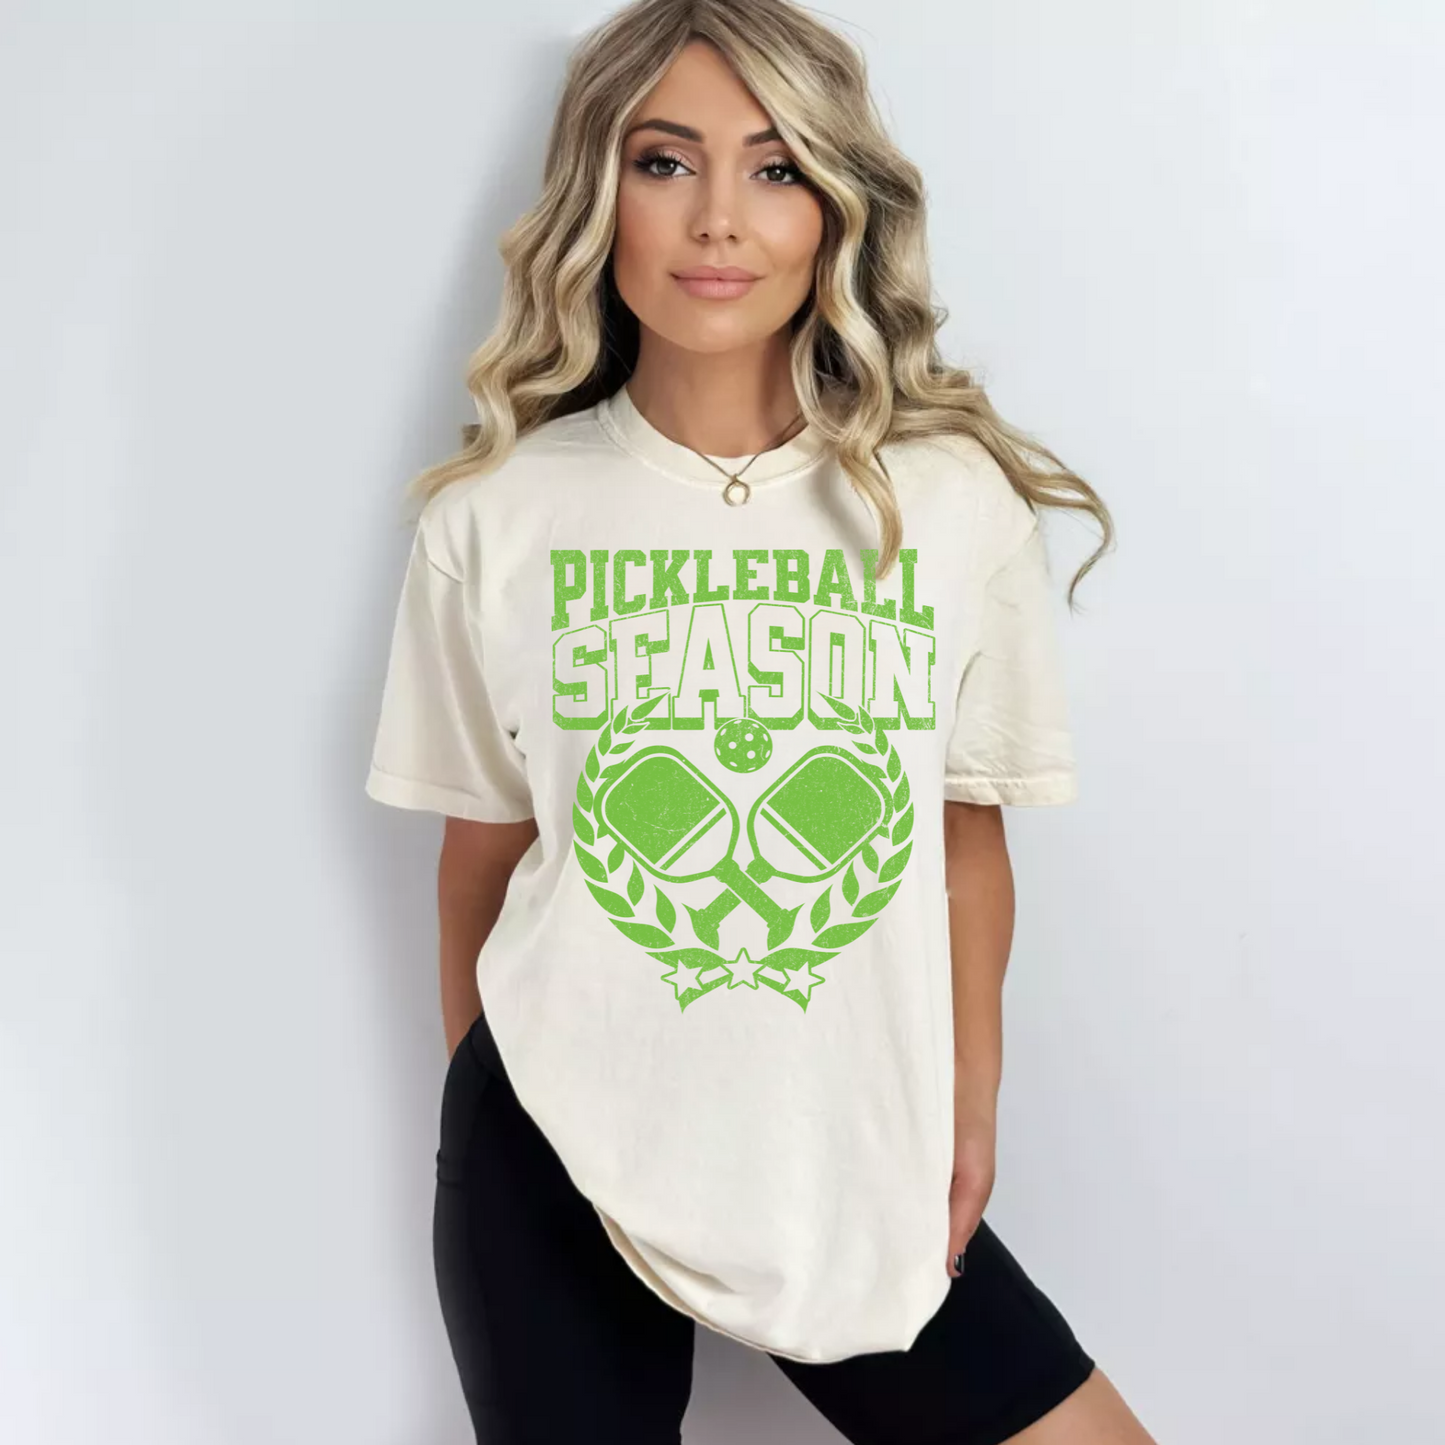 (shirt not included) Pickleball Season in bright Green Screen print Transfer